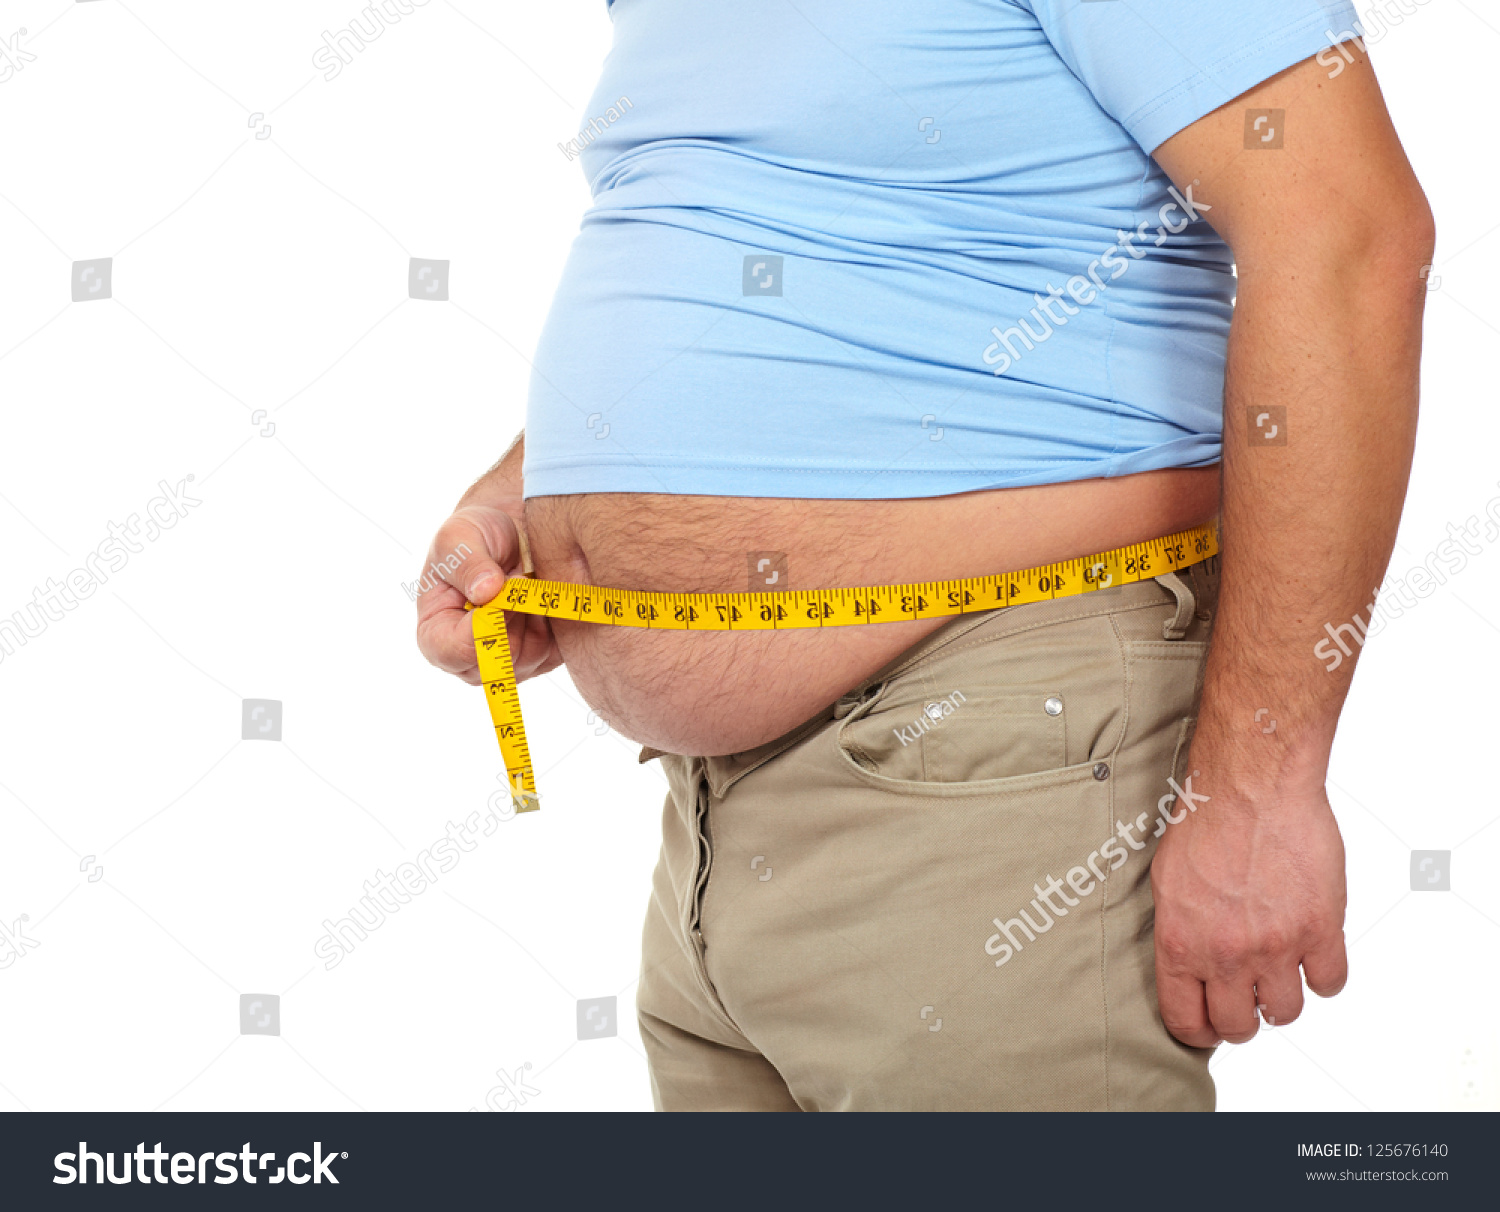 Избавление от лишнего веса мужчине без диет